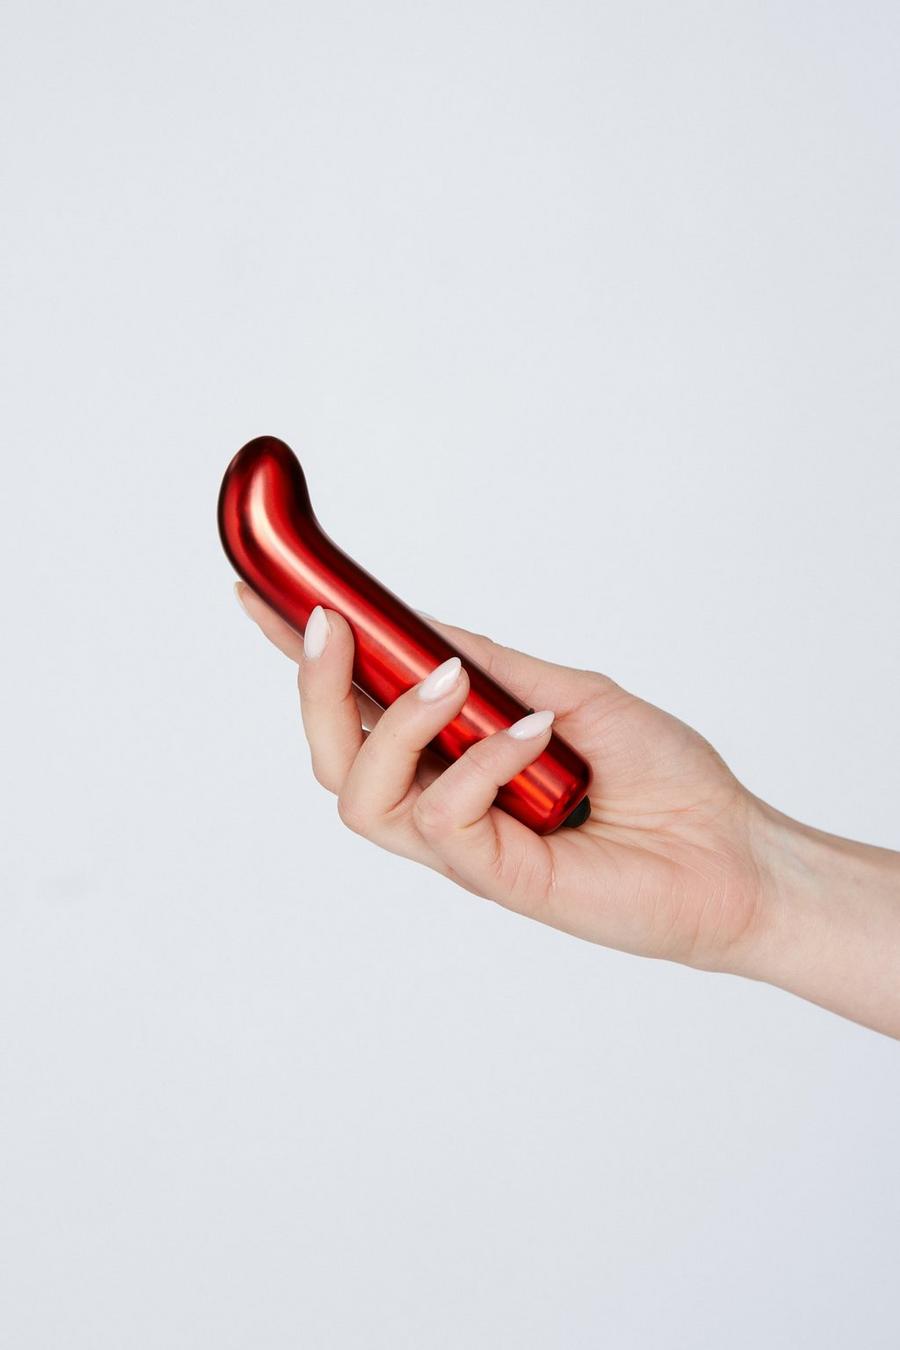 Red Sleek Angled G-Spot Bullet Vibrator Sex Toy